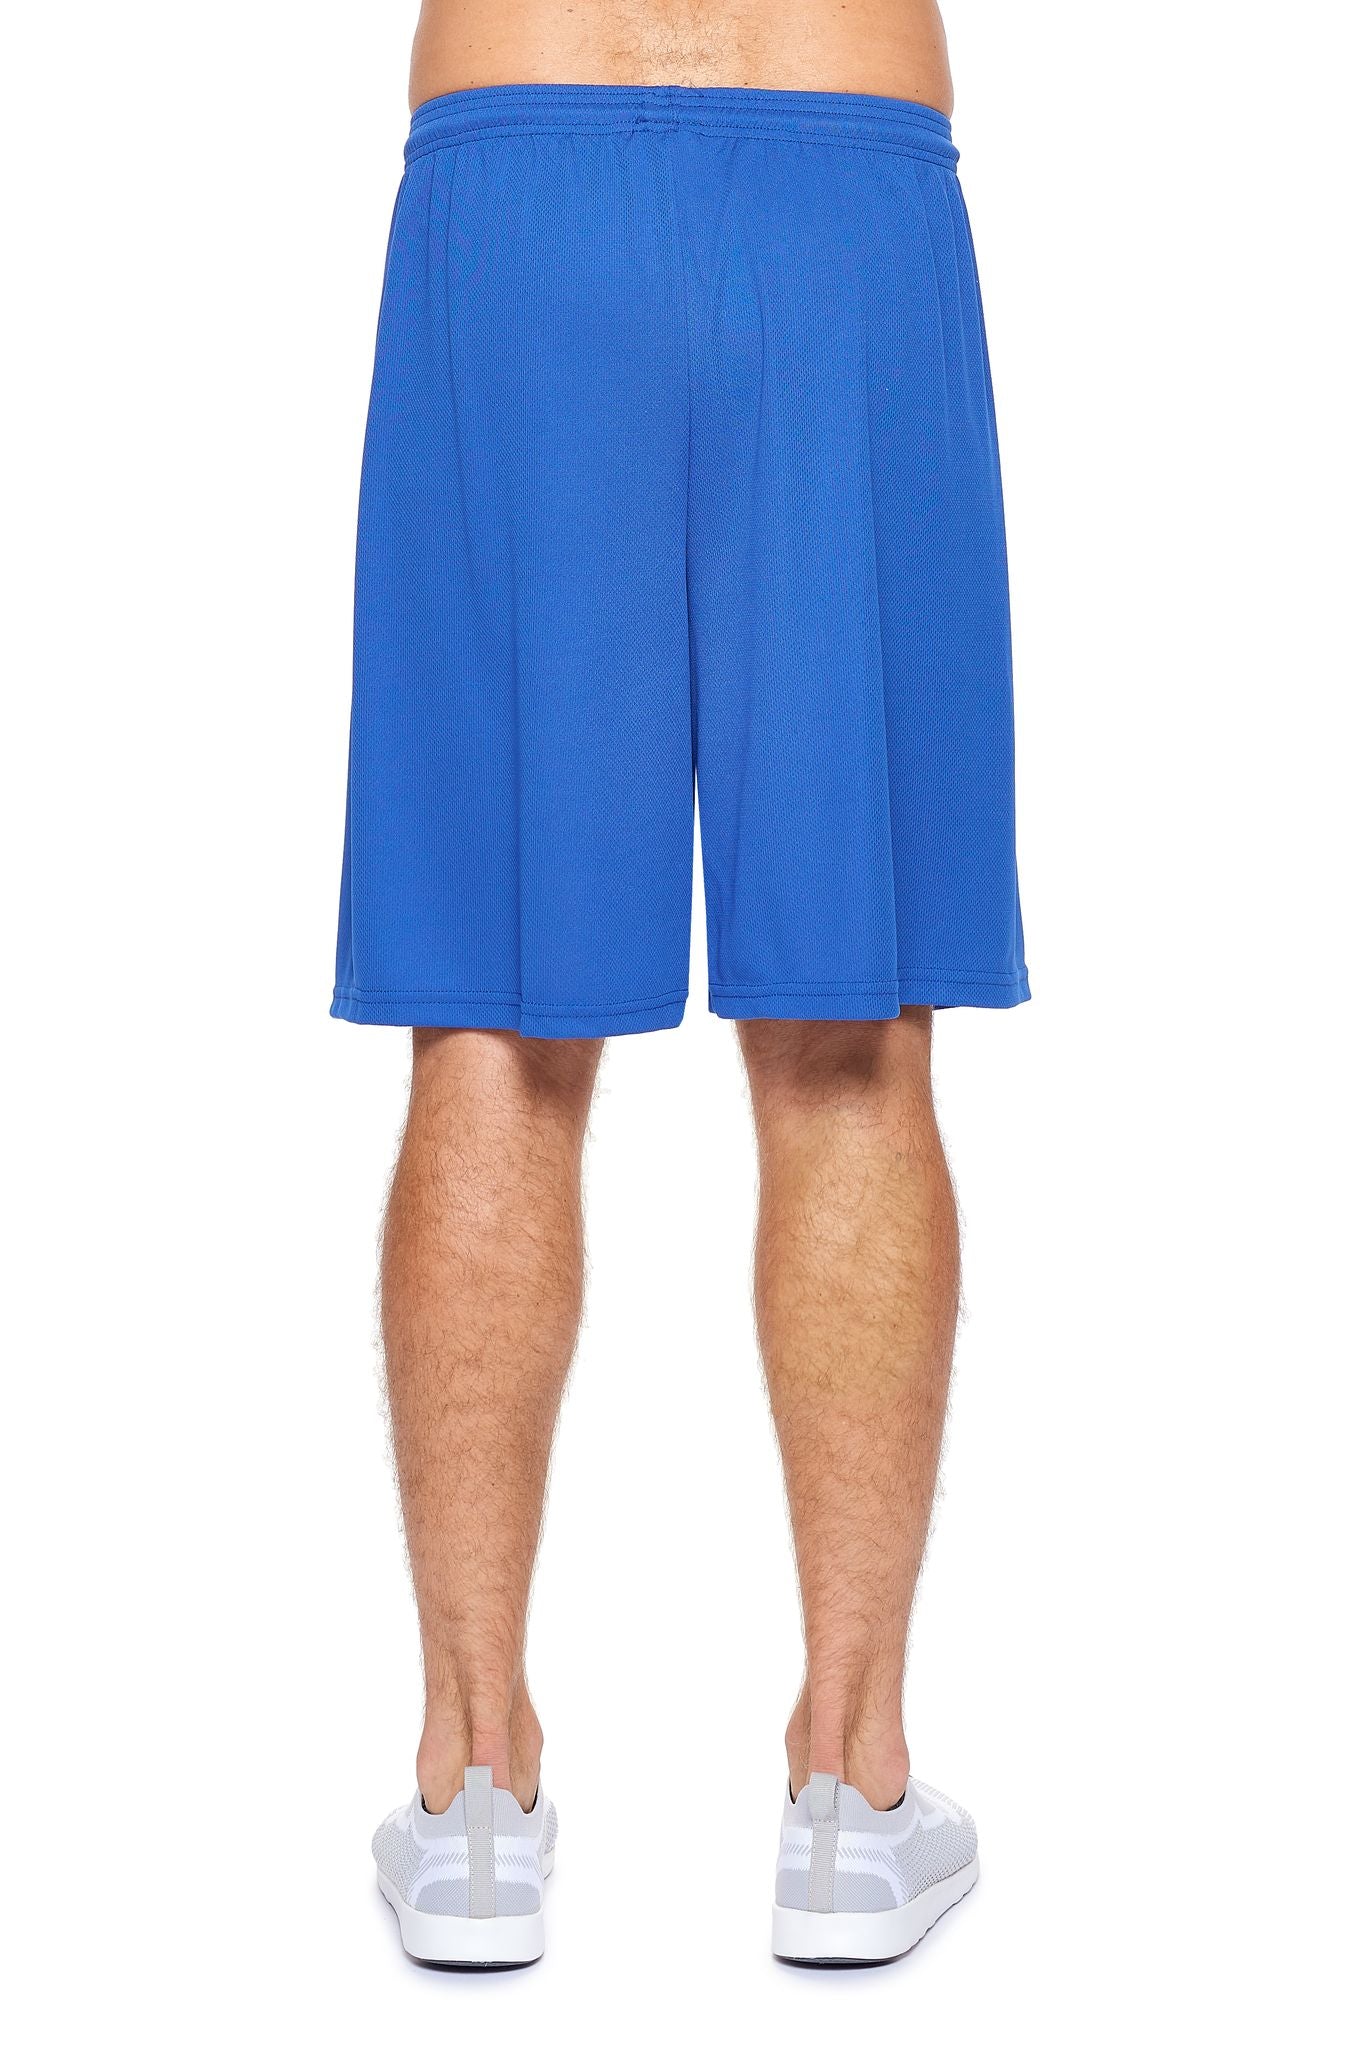 Expert Brand Men's Oxymesh™ Training Shorts in Royal Blue Image 3#royal-blue